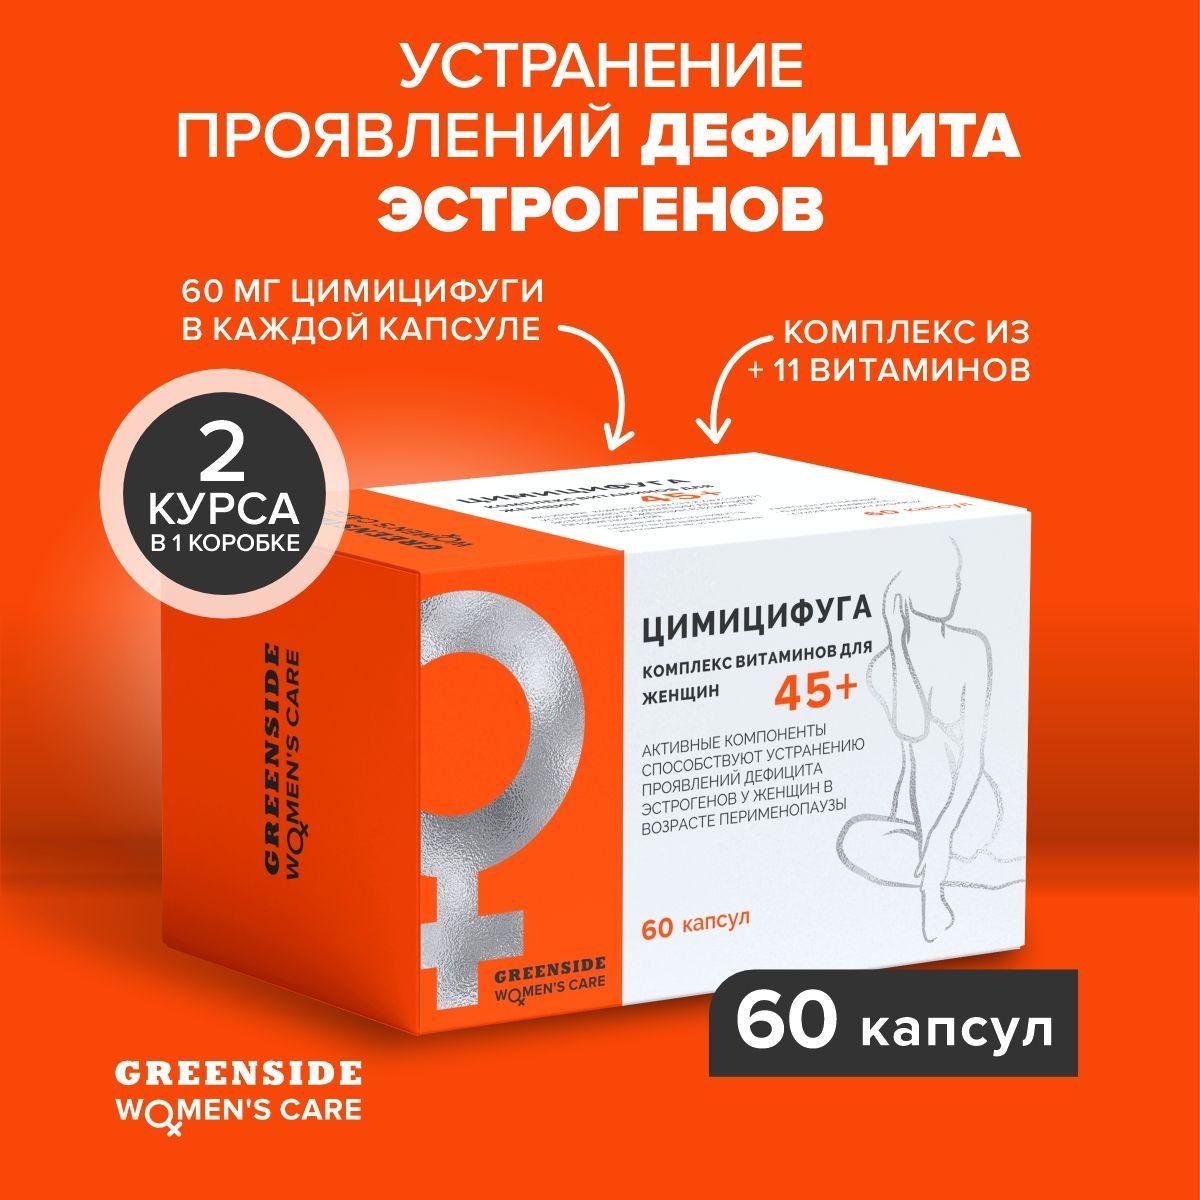 Цимицифуга с комплексом витаминов для женщин 45+ при климаксе и менопаузе, капс 450 мг, №60